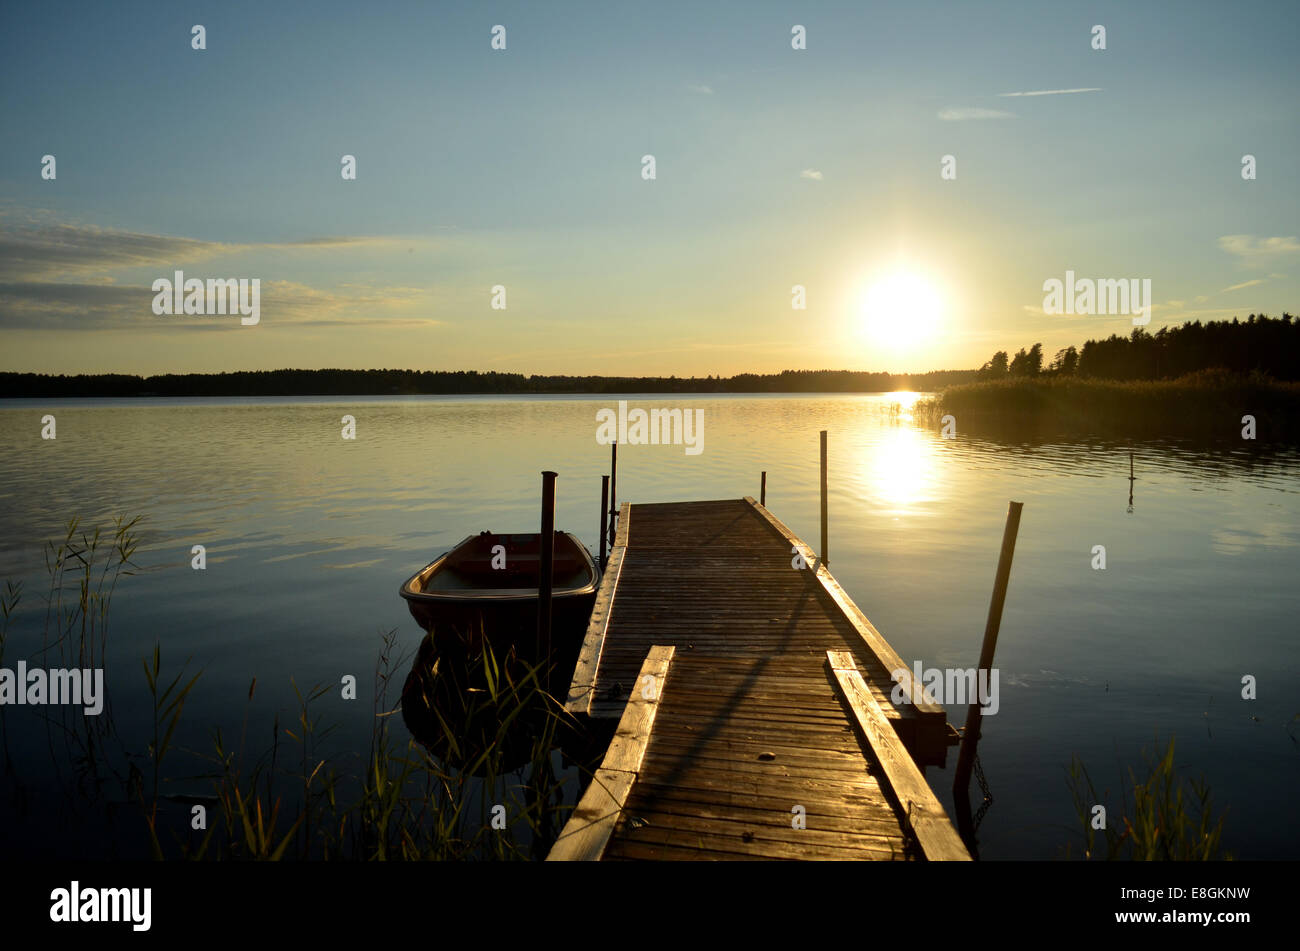 Saffle Lake at sunset, Sweden Stock Photo